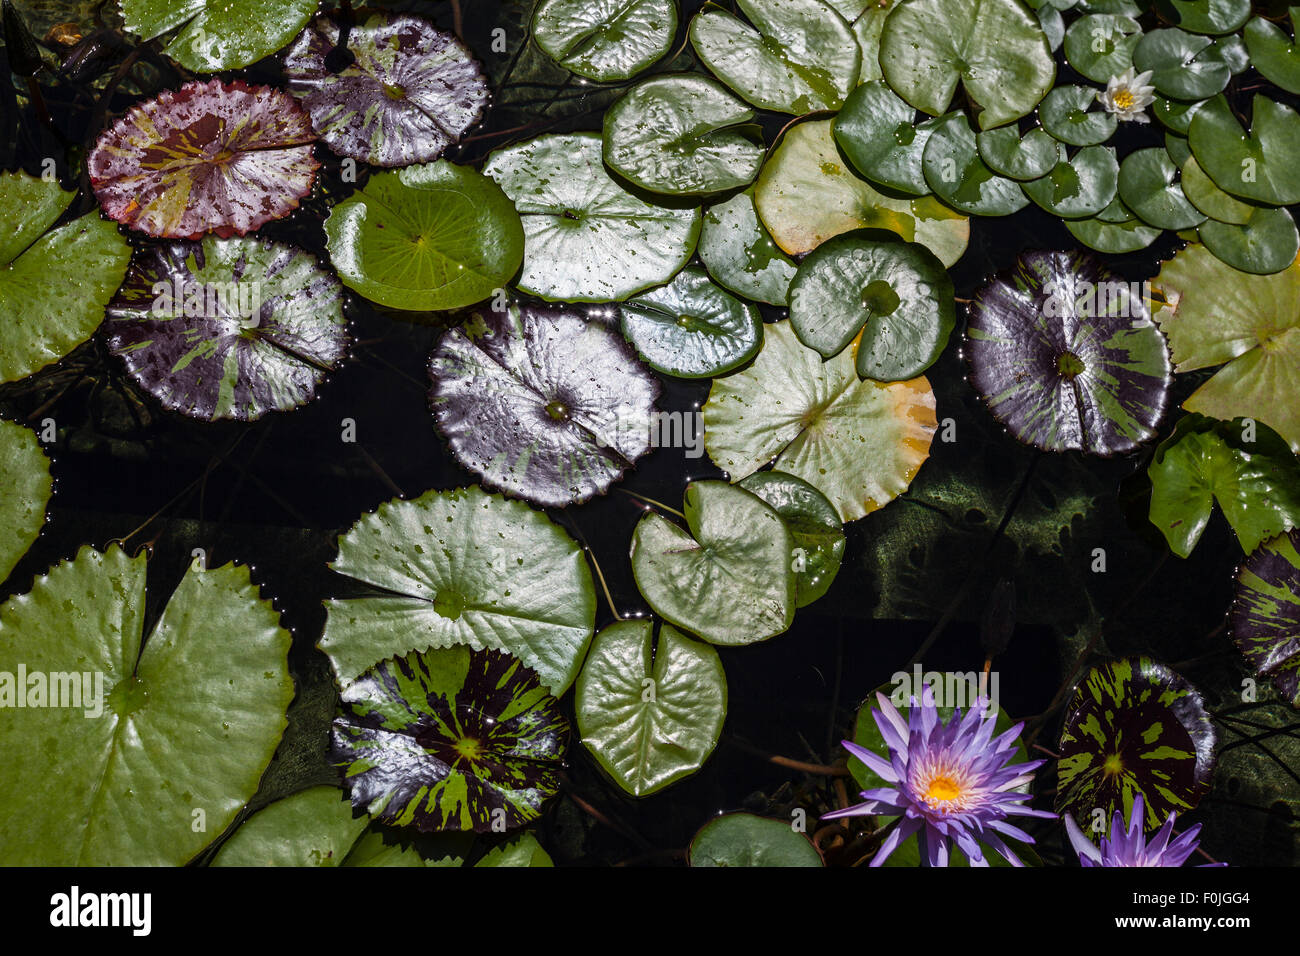 Seerosenblatt Teich mit bunten Blättern und Blumen. Stockfoto